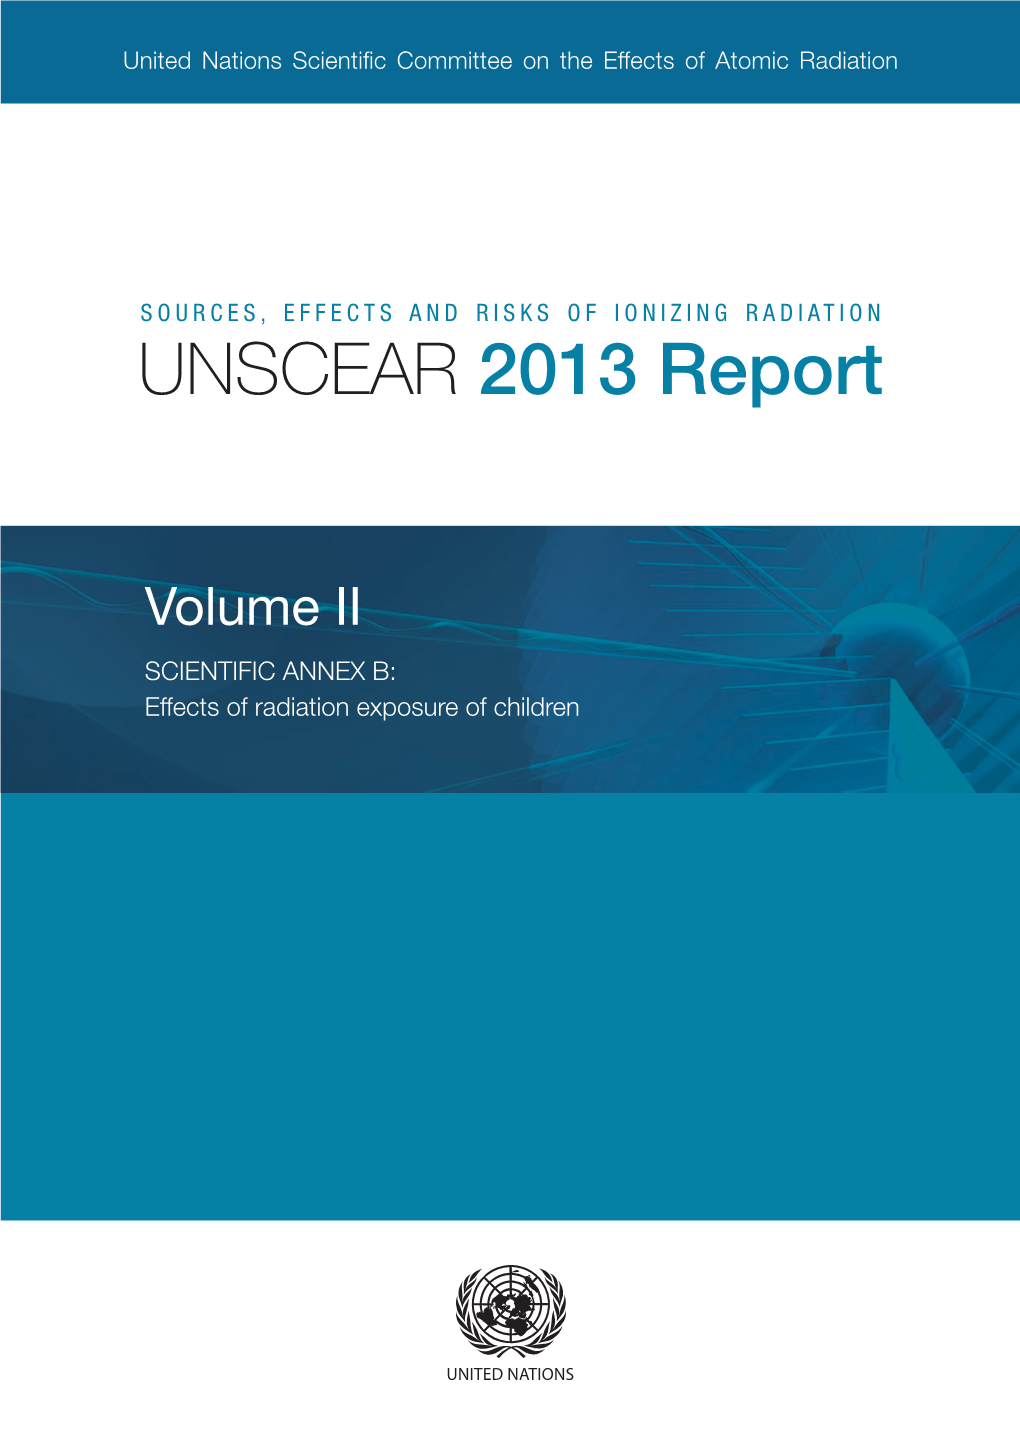 UNSCEAR 2013 Report Vol.II